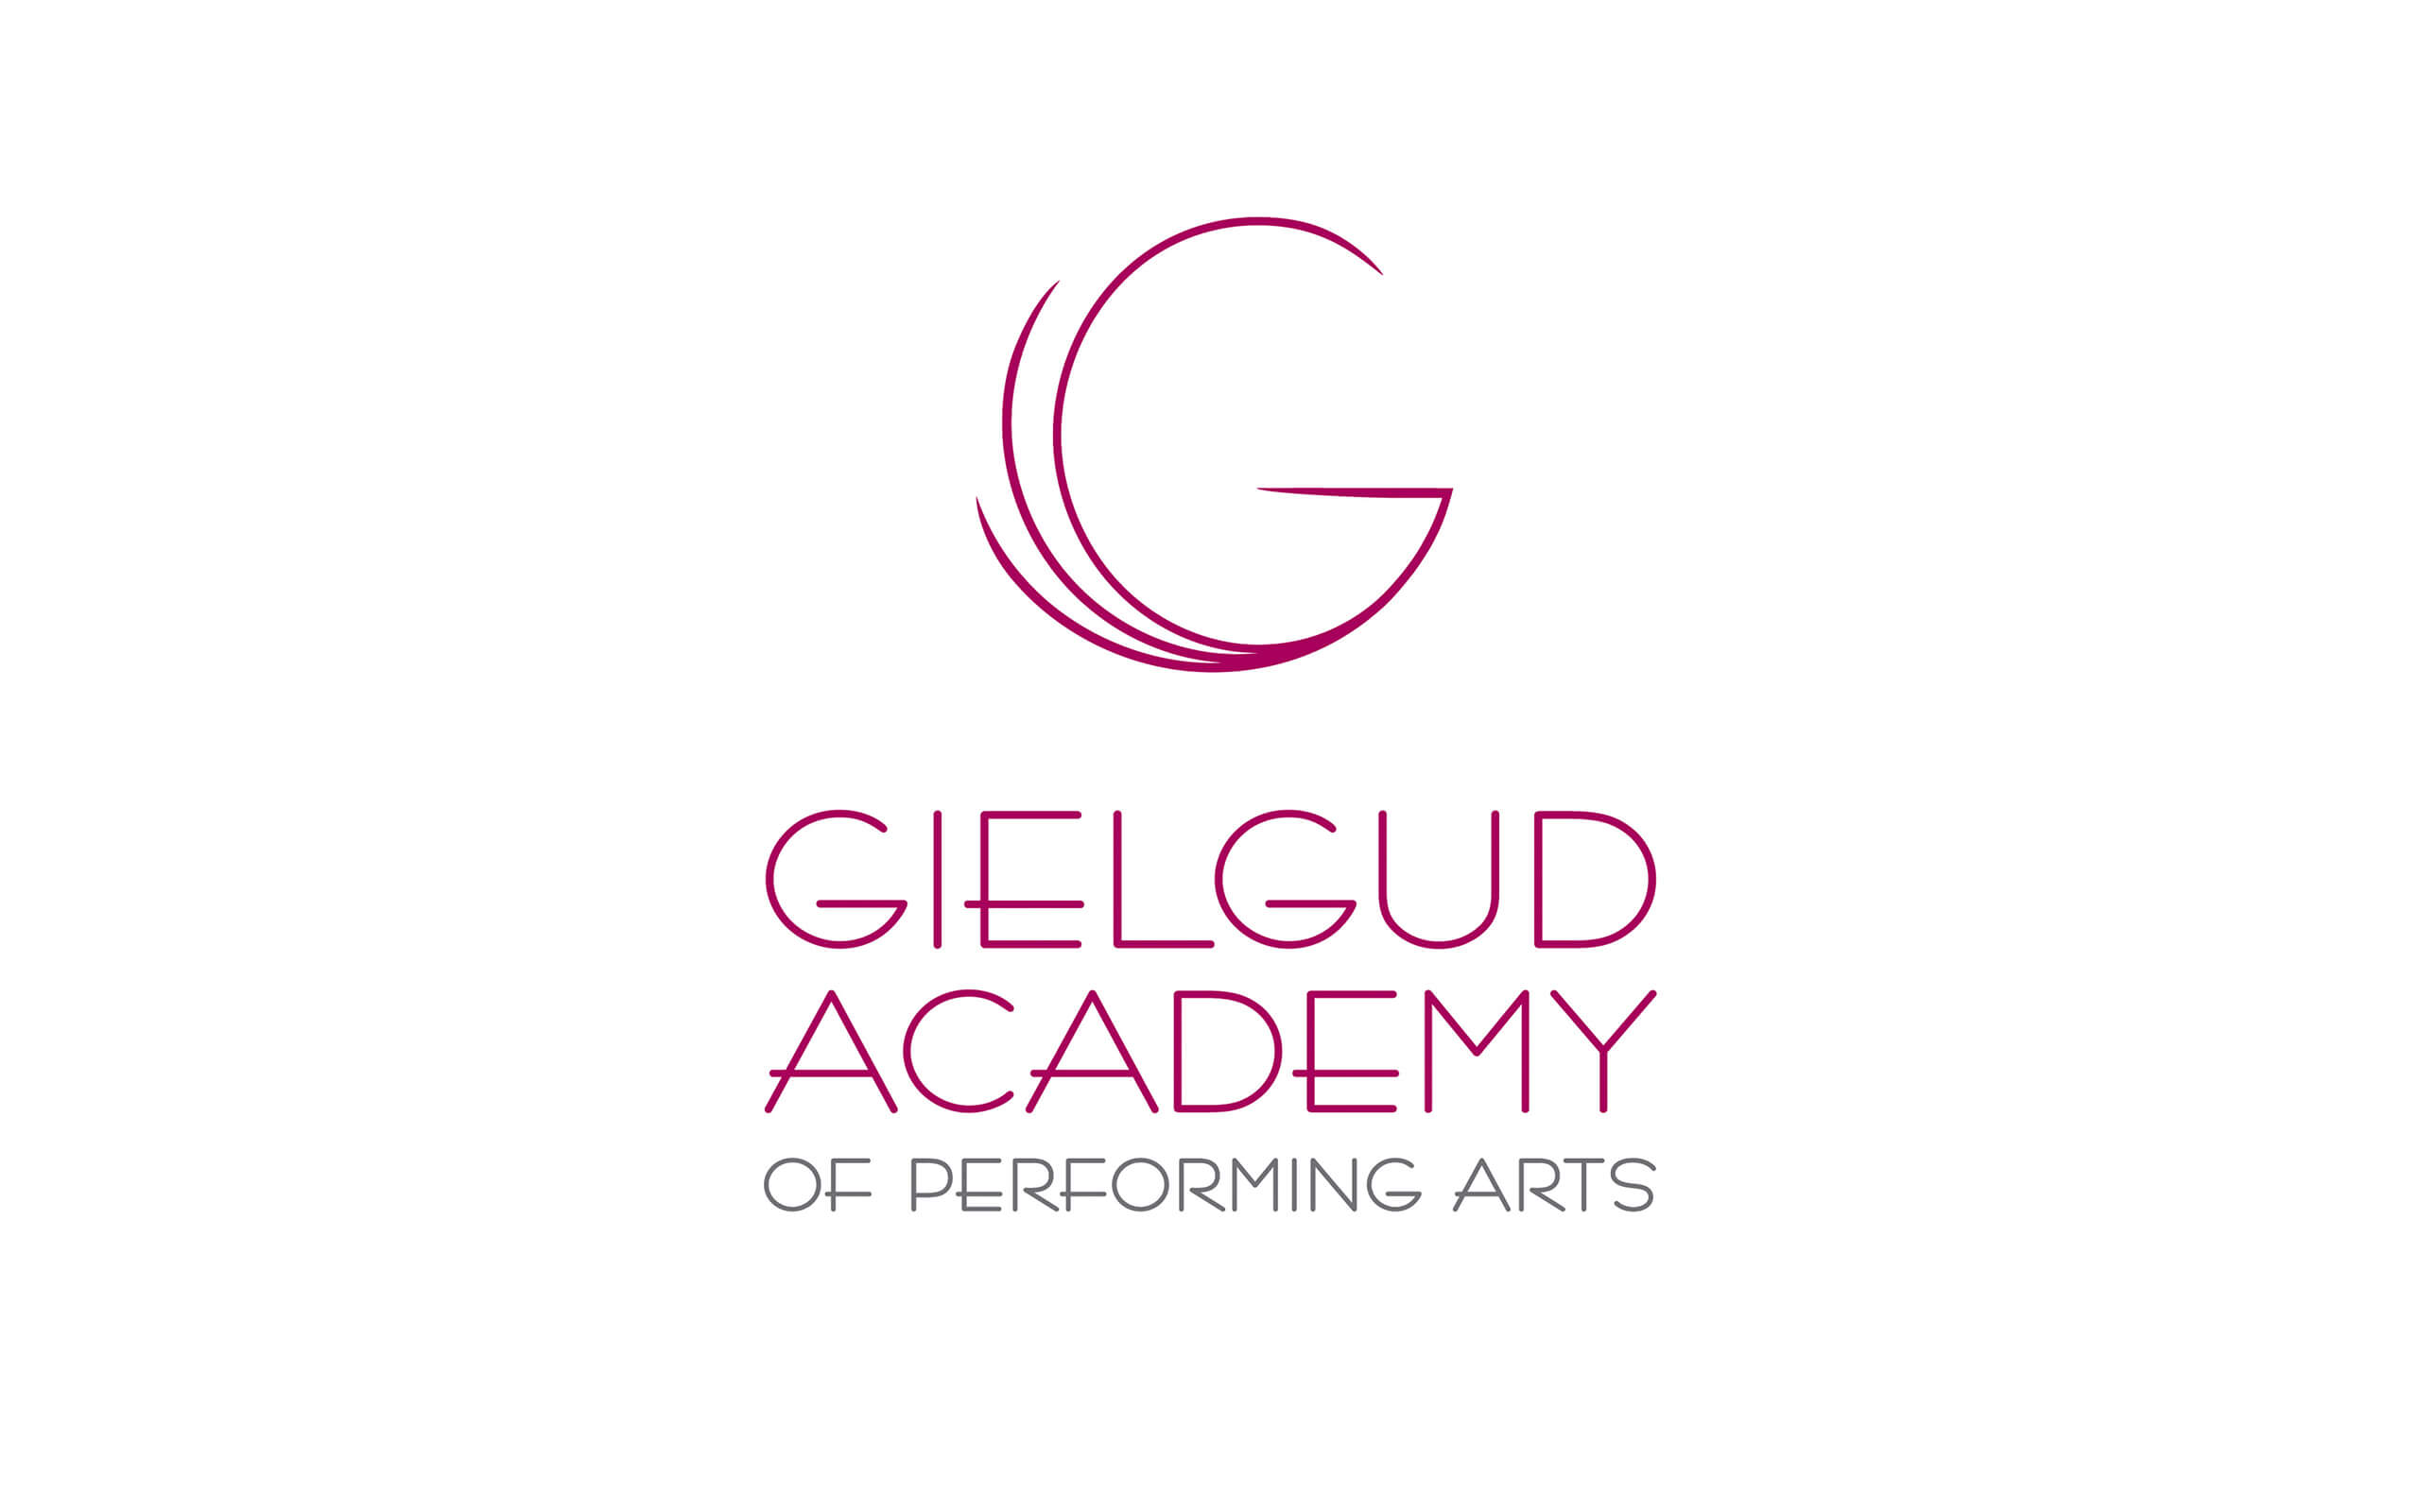 Gielgud Academy of performing arts logo